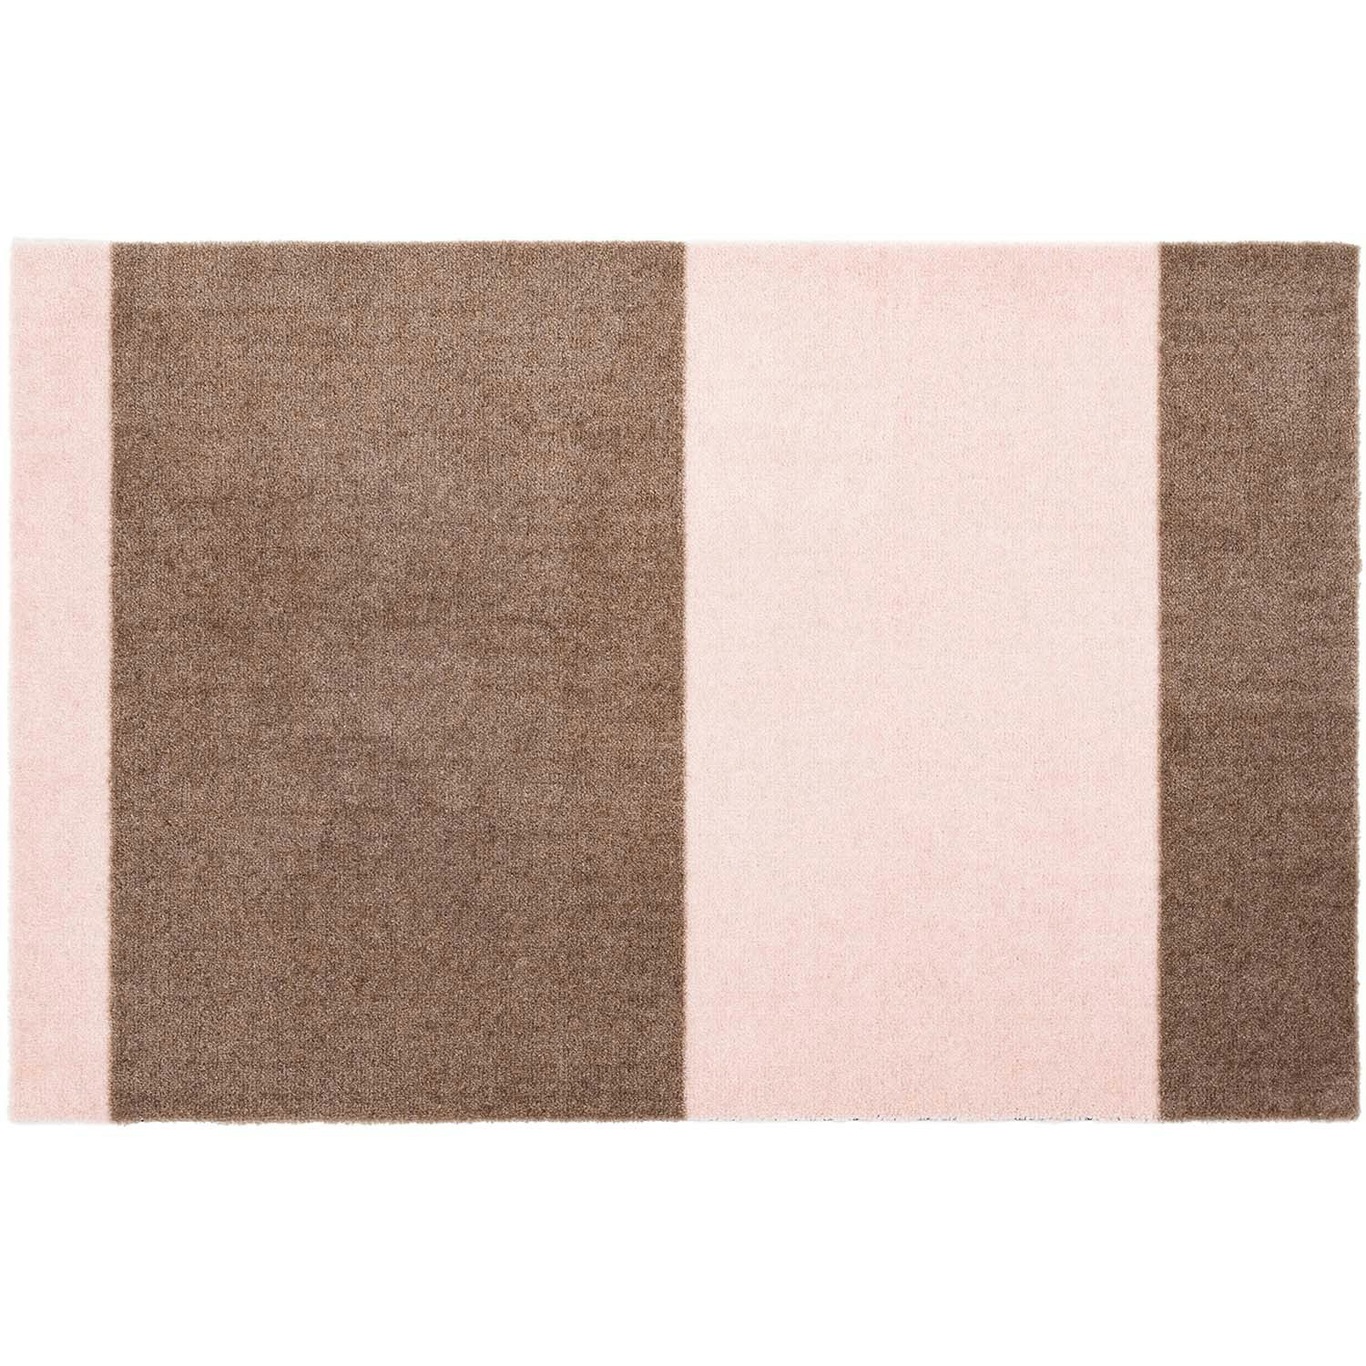 Stripes Teppich Sandfarben/Light Rose, 60x90 cm